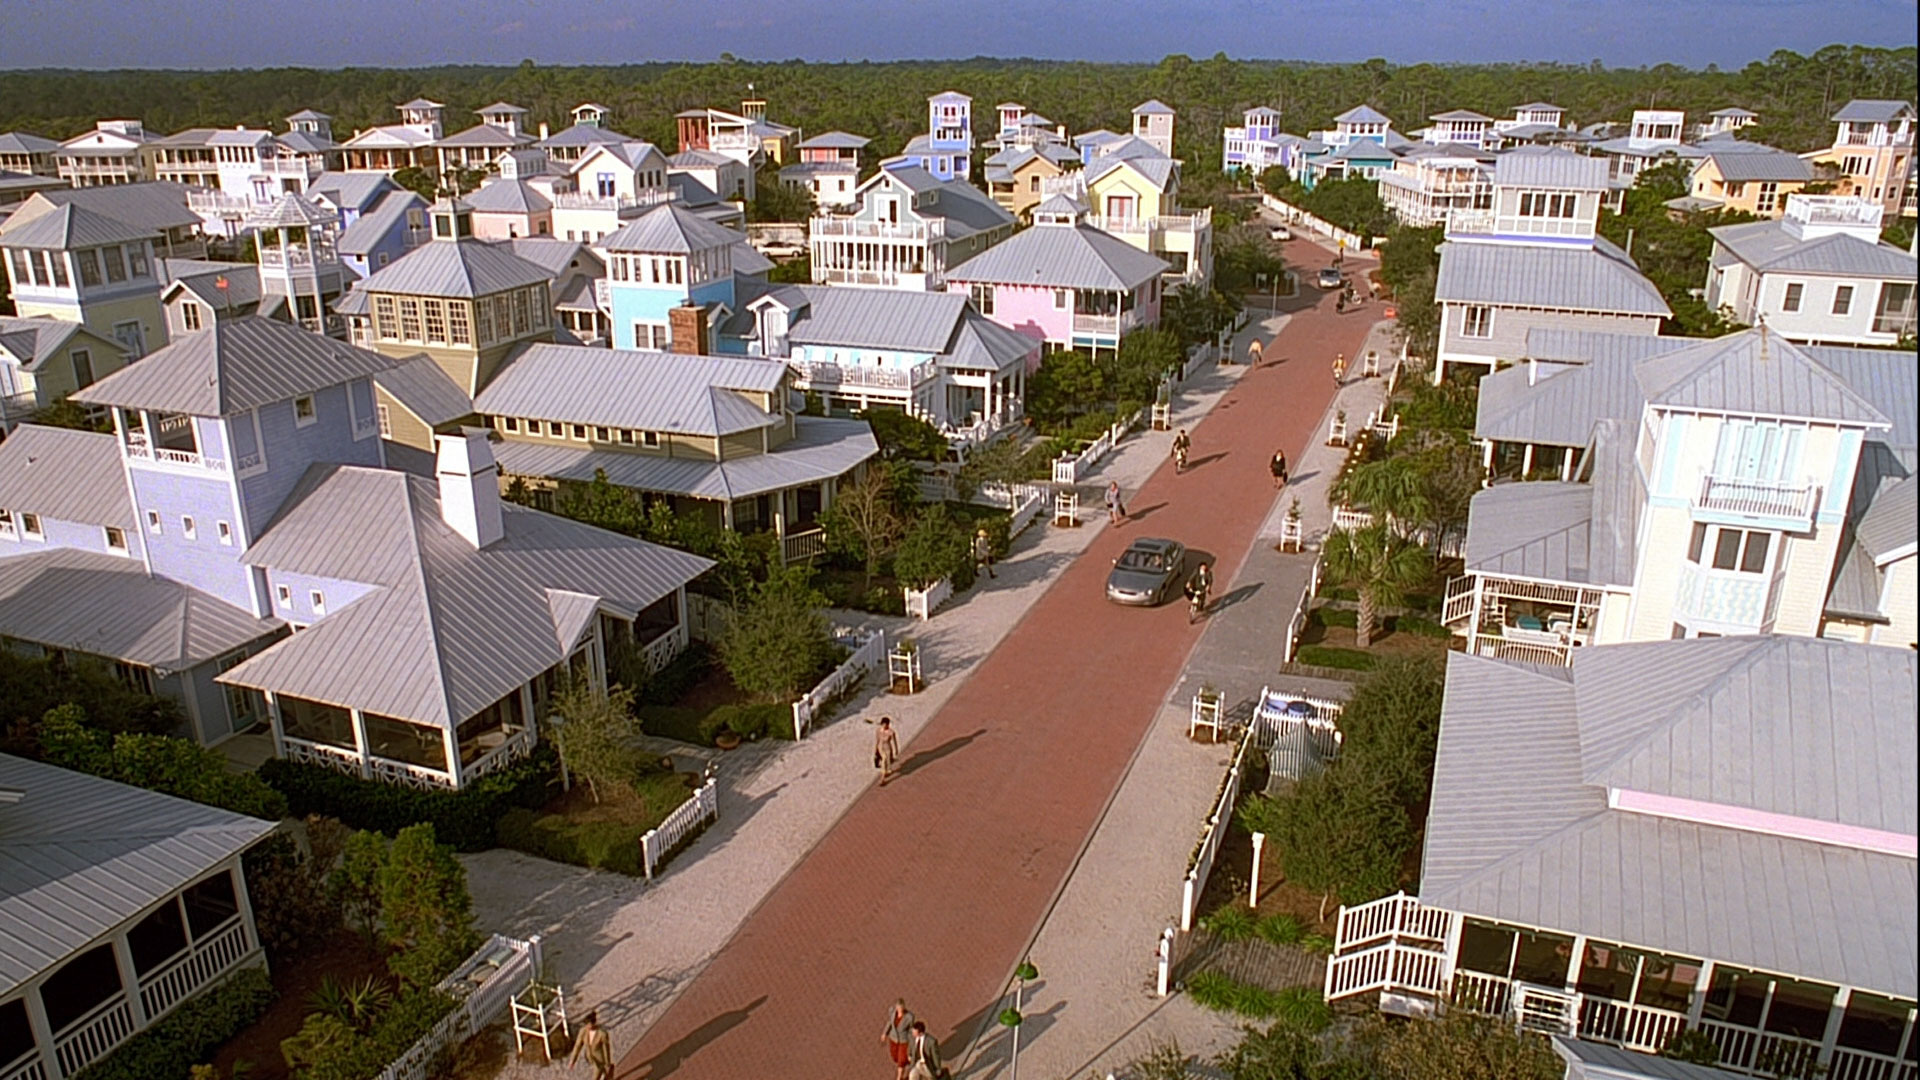 New Urbanist movement in neighborhood planning, Seaside, Florida.